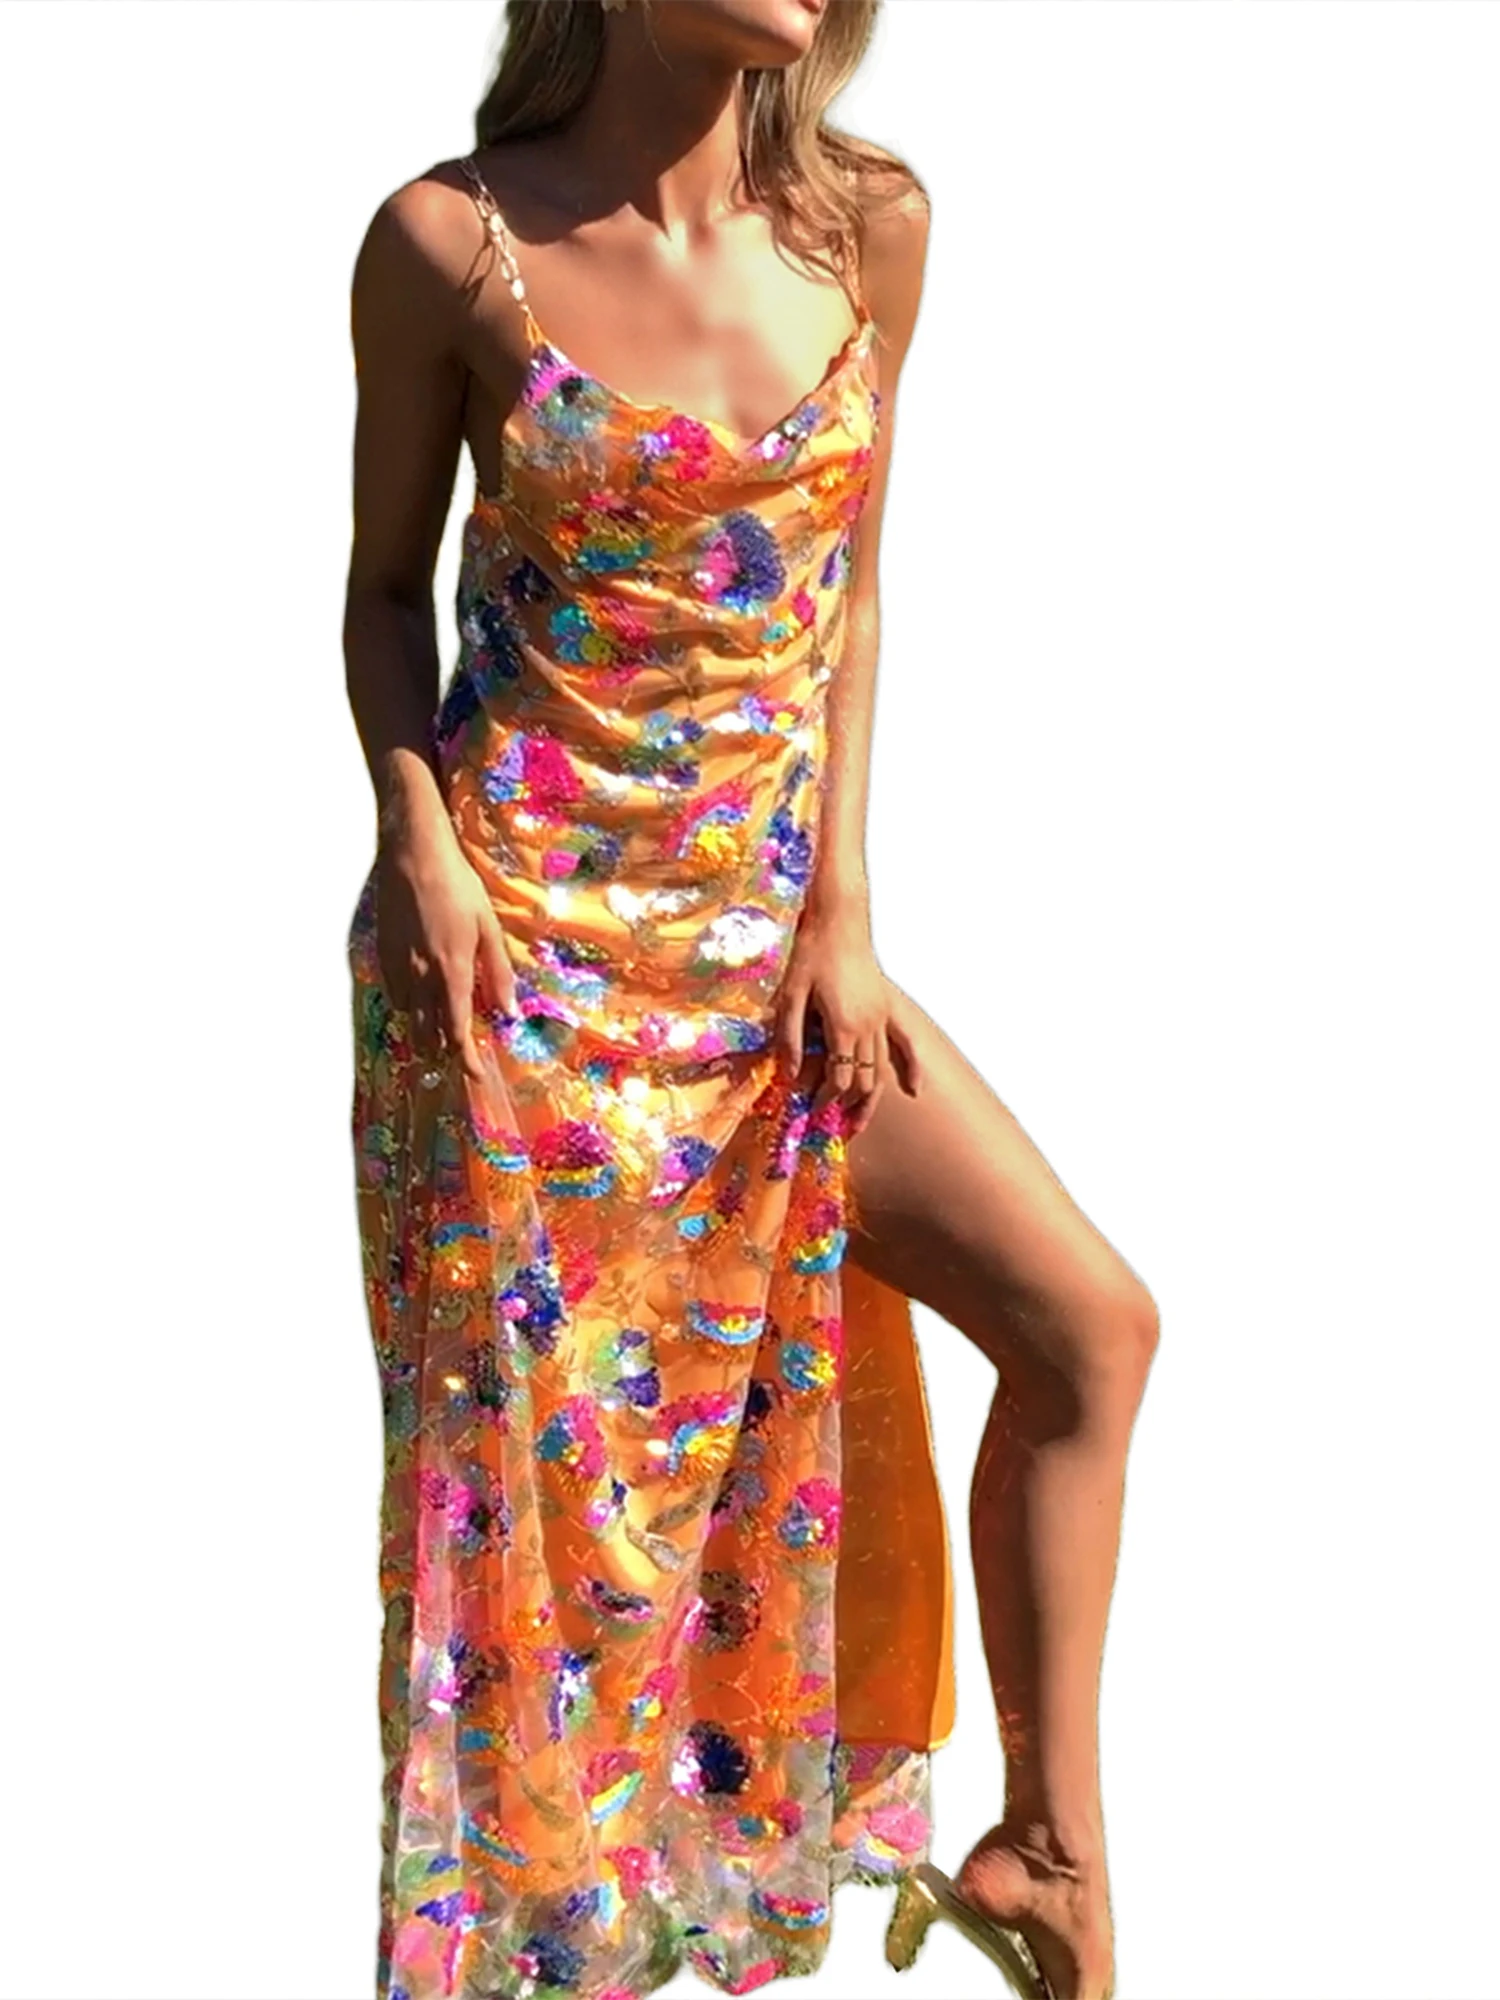 

Glamorous Goddess Women s Elegant Maxi Dress with Embellished Sequin Bodice and Flowy Chiffon Skirt